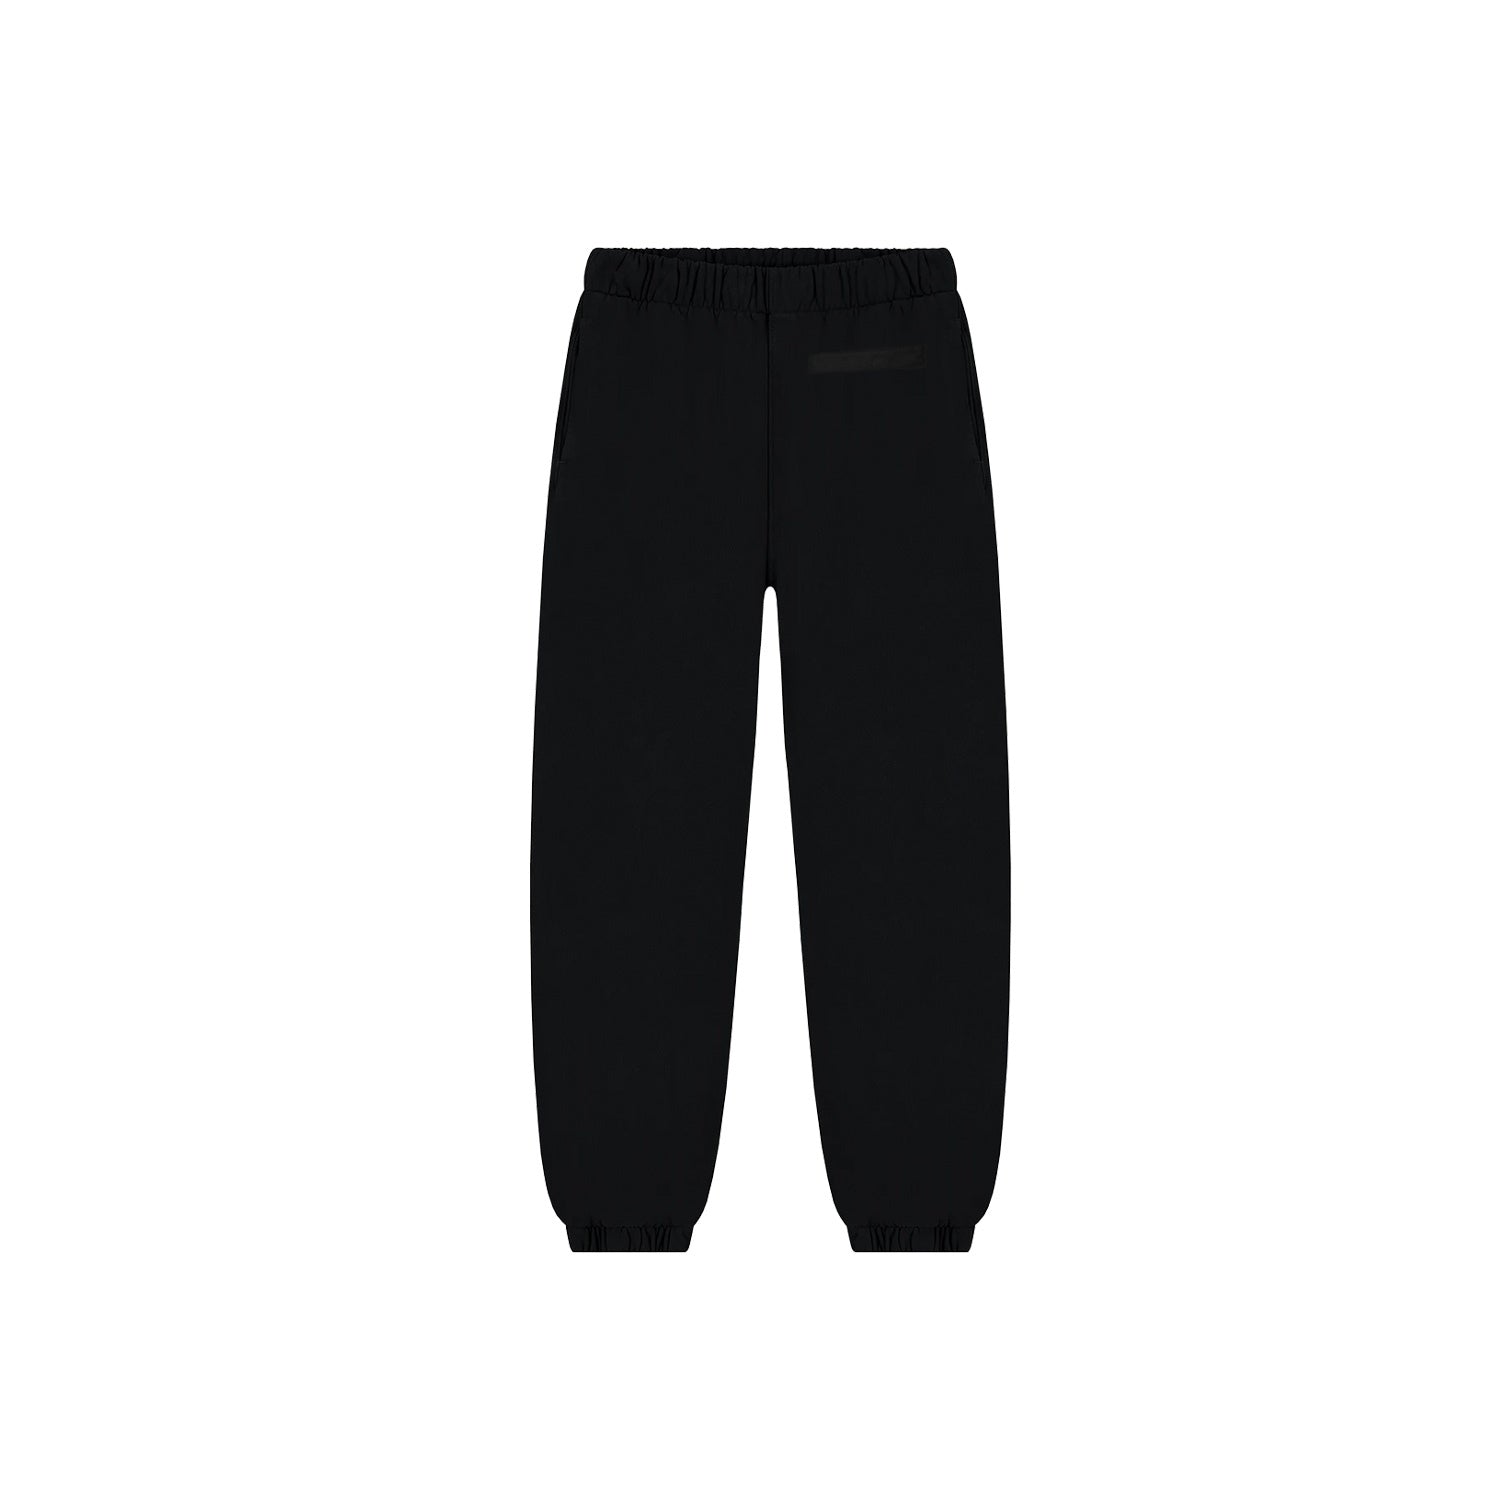 PTC Core Black Sweatpants